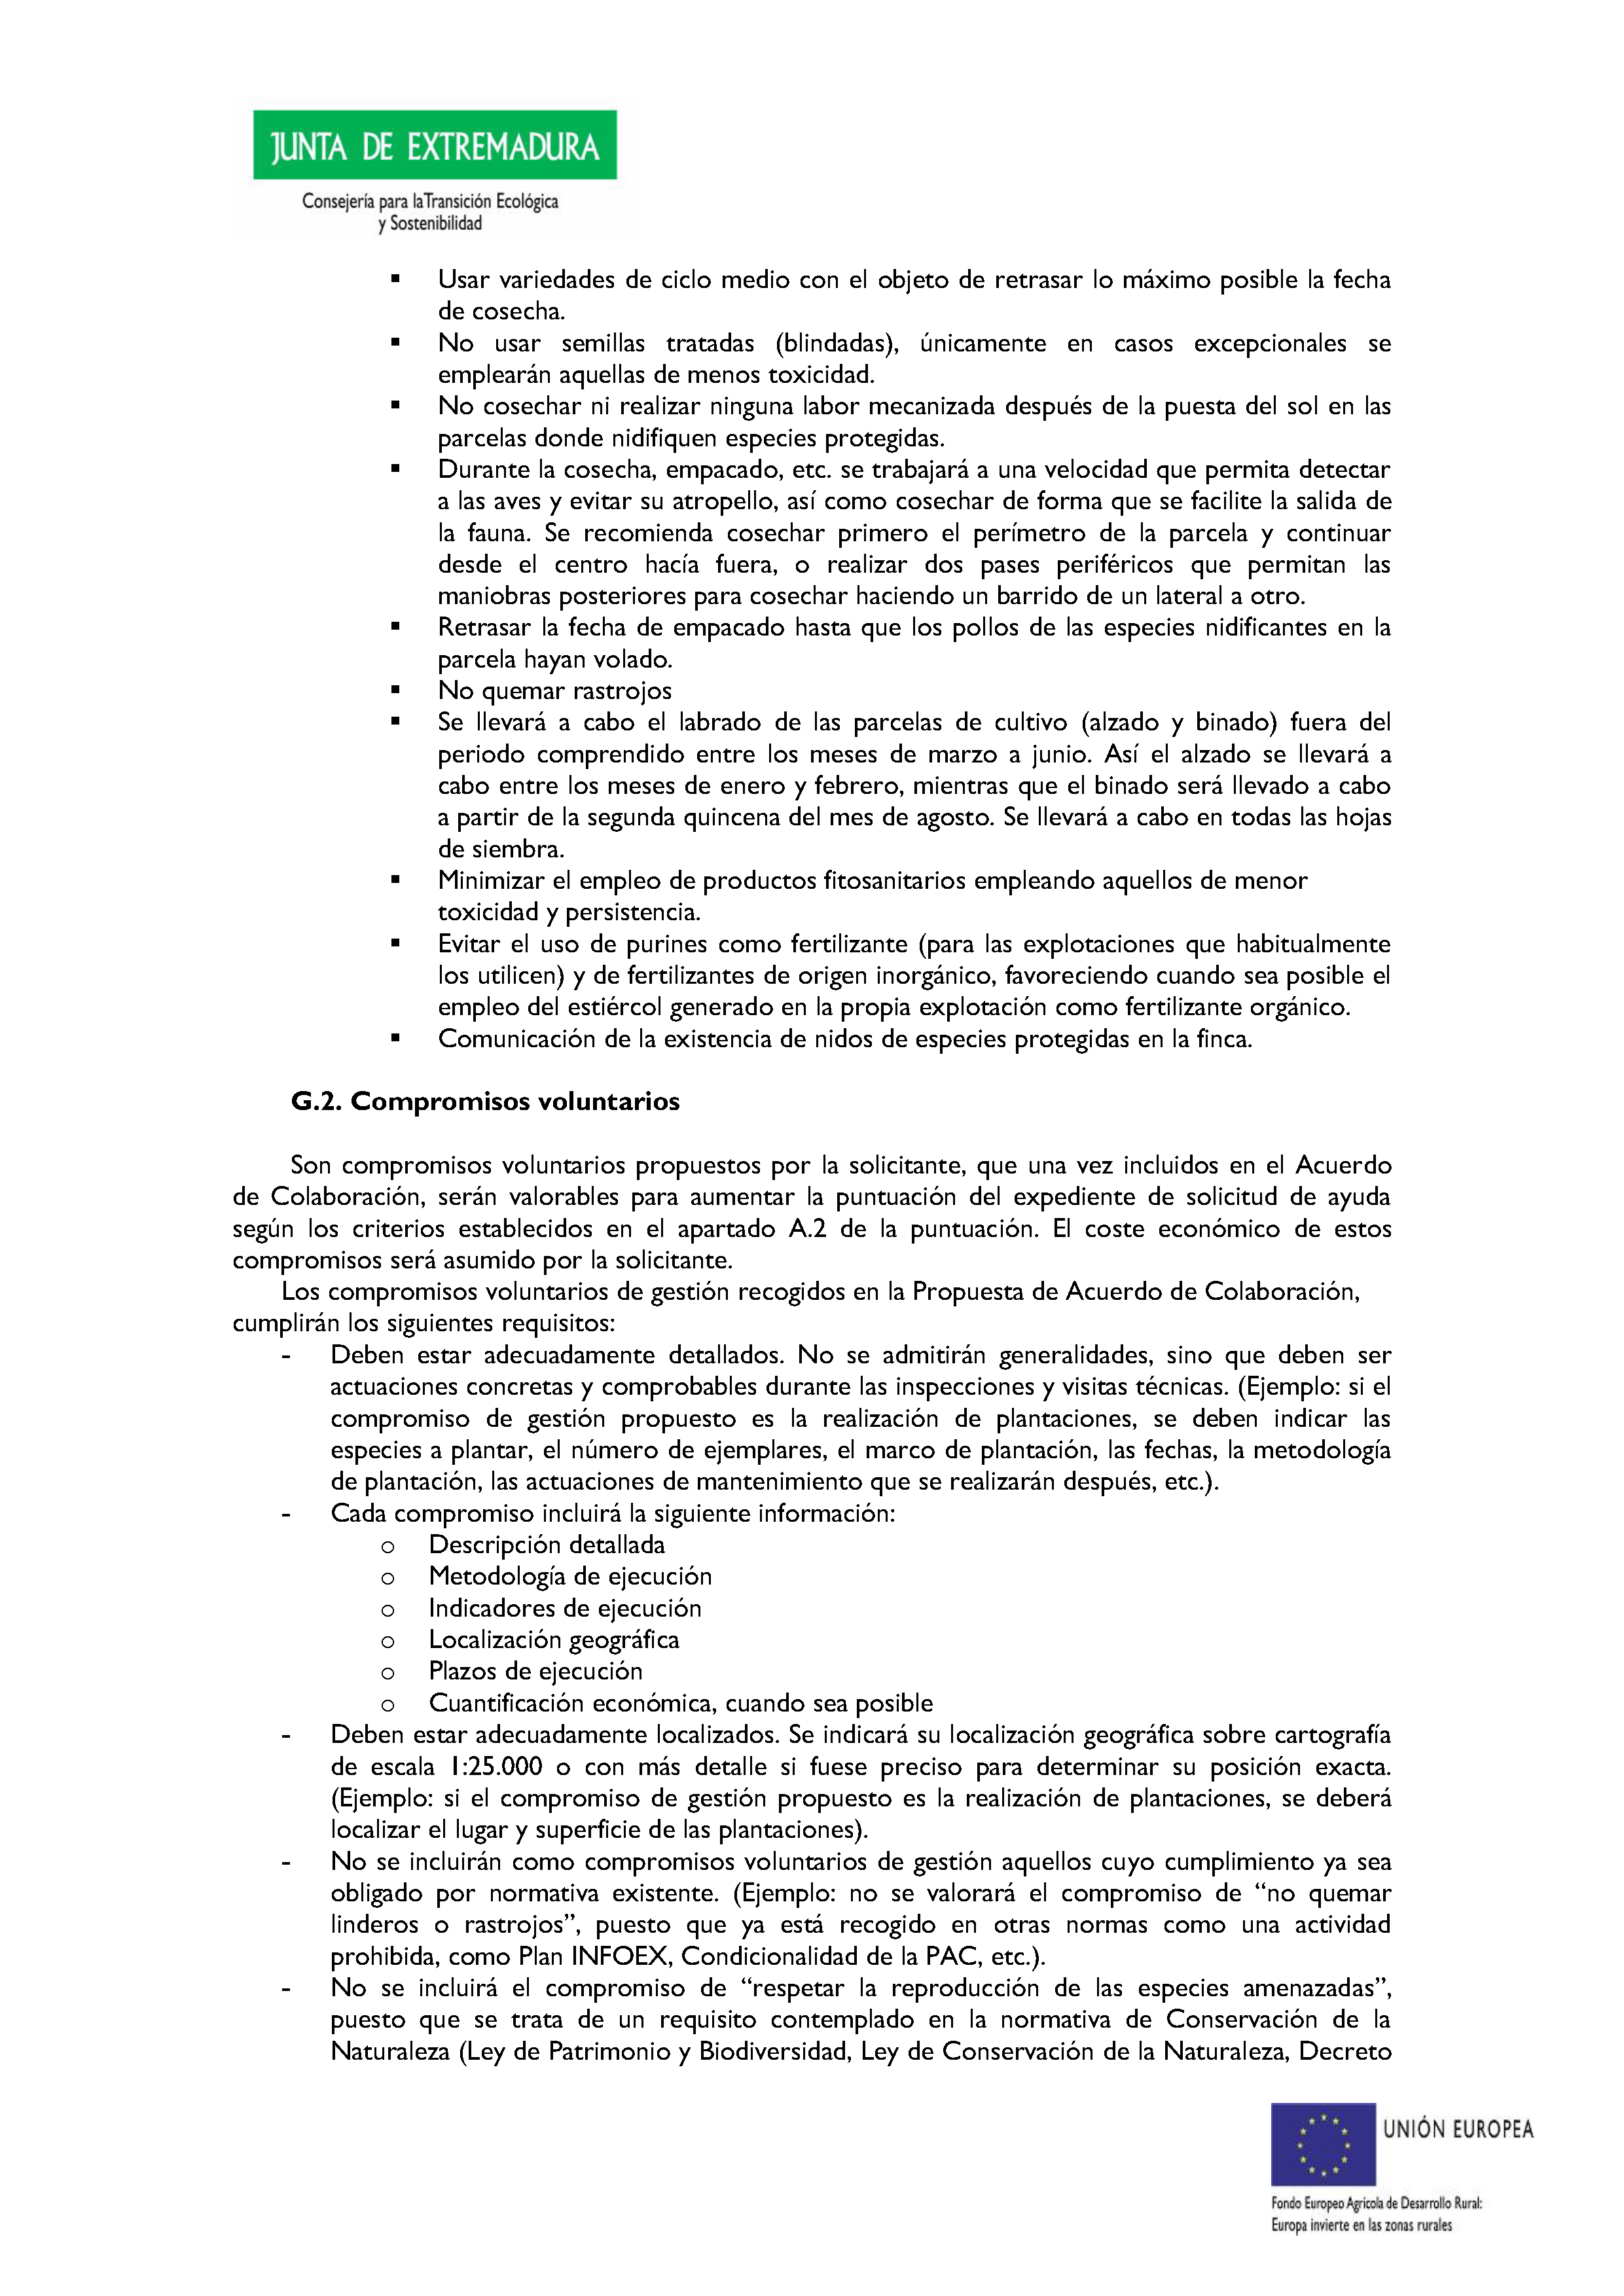 ANEXO VIII 1. PROPUESTA DE ACUERDO DE COLABORACIÓN PARA EL DESARROLLO SOSTENIBLE Pag 3